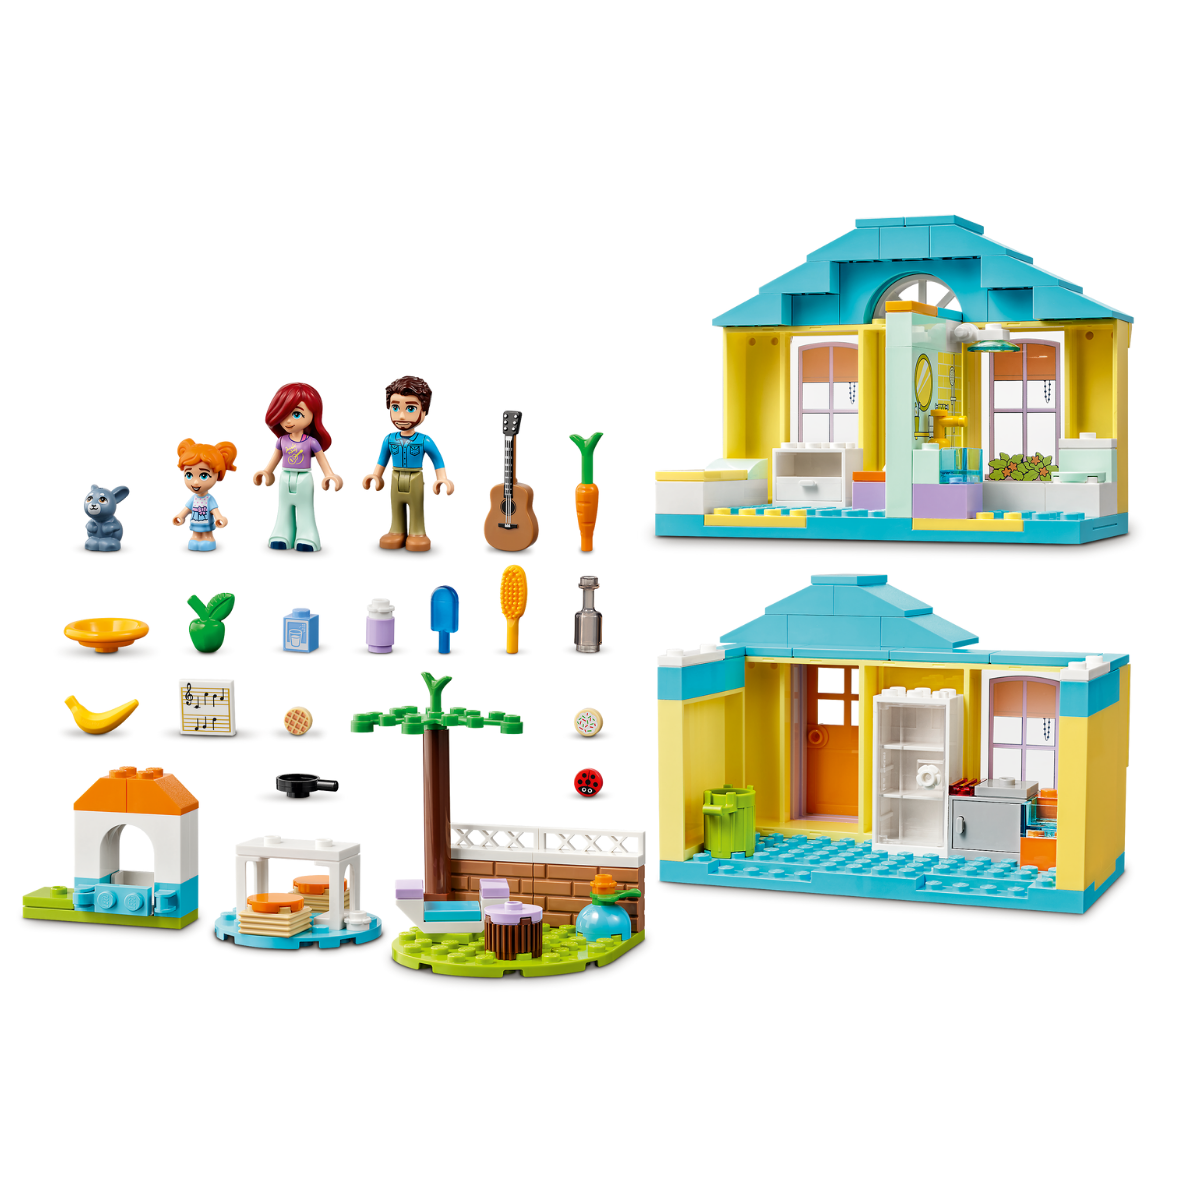 Lego Friends Paisley&#39;s House